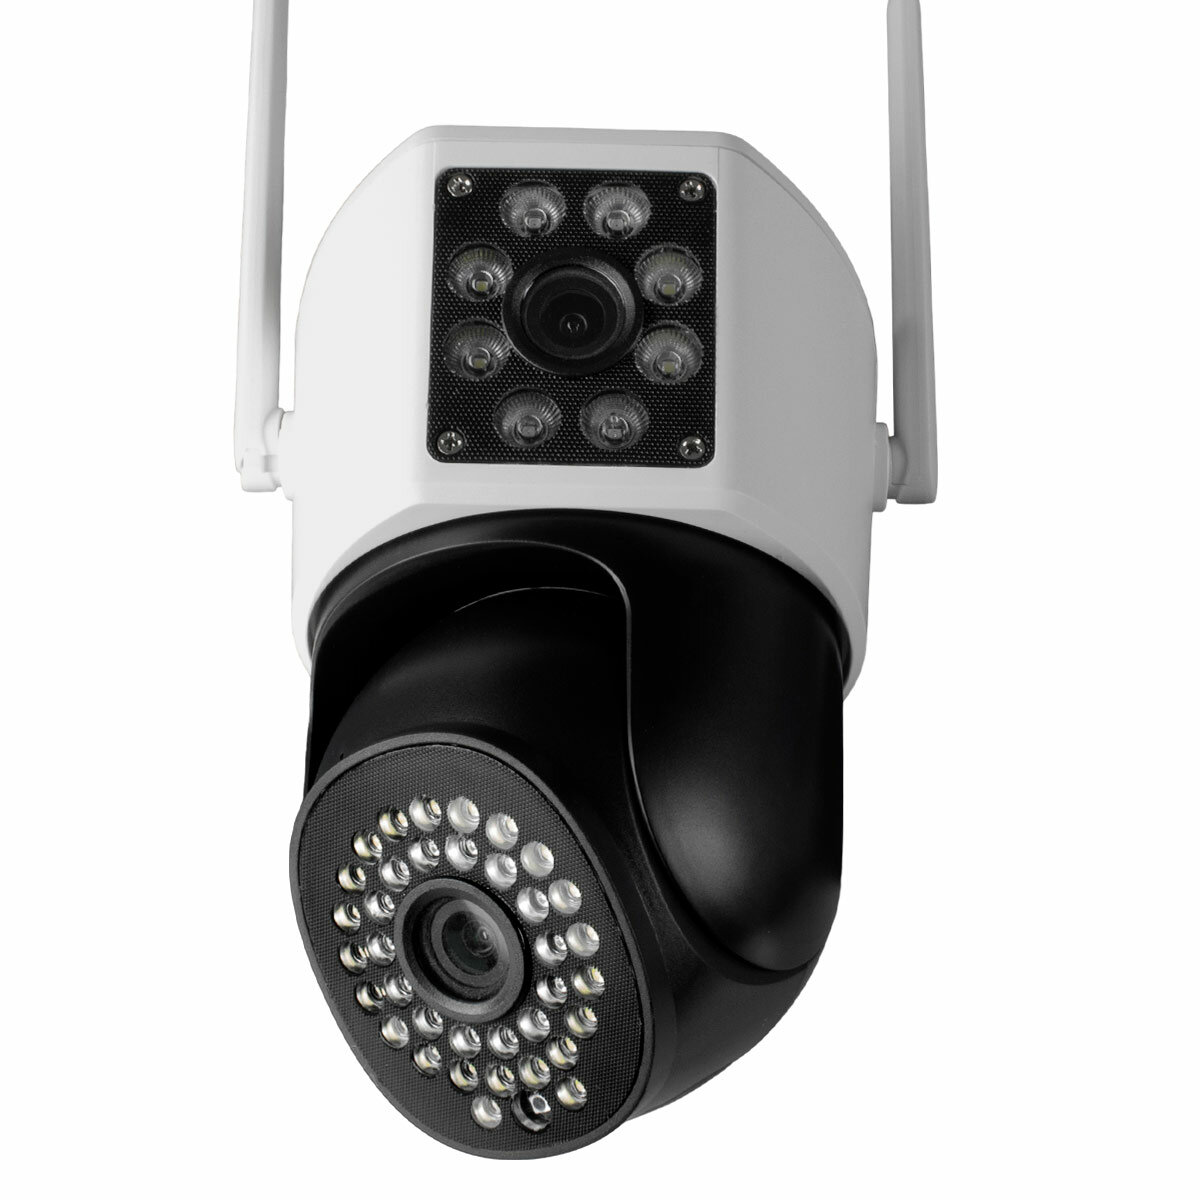 Поворотная IP 4G камера видеонаблюдения Ps-Link PS-GBC20 2Мп c 2 камерами и LED подсветкой